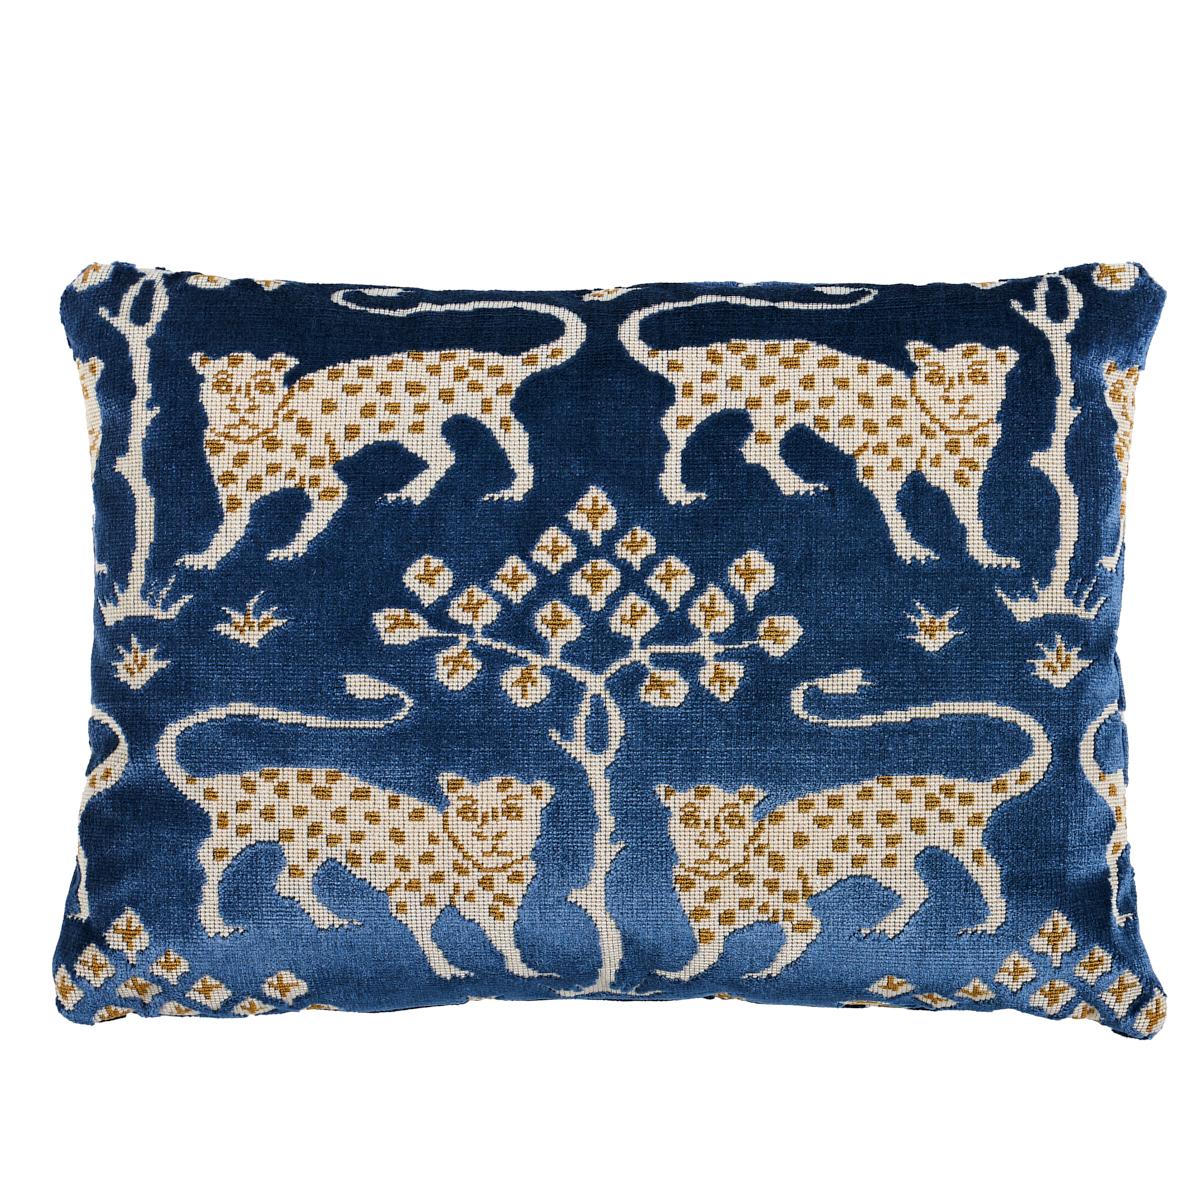 Shumacher Woodland Leopard Velvet 16x12" Pillow in Sapphire